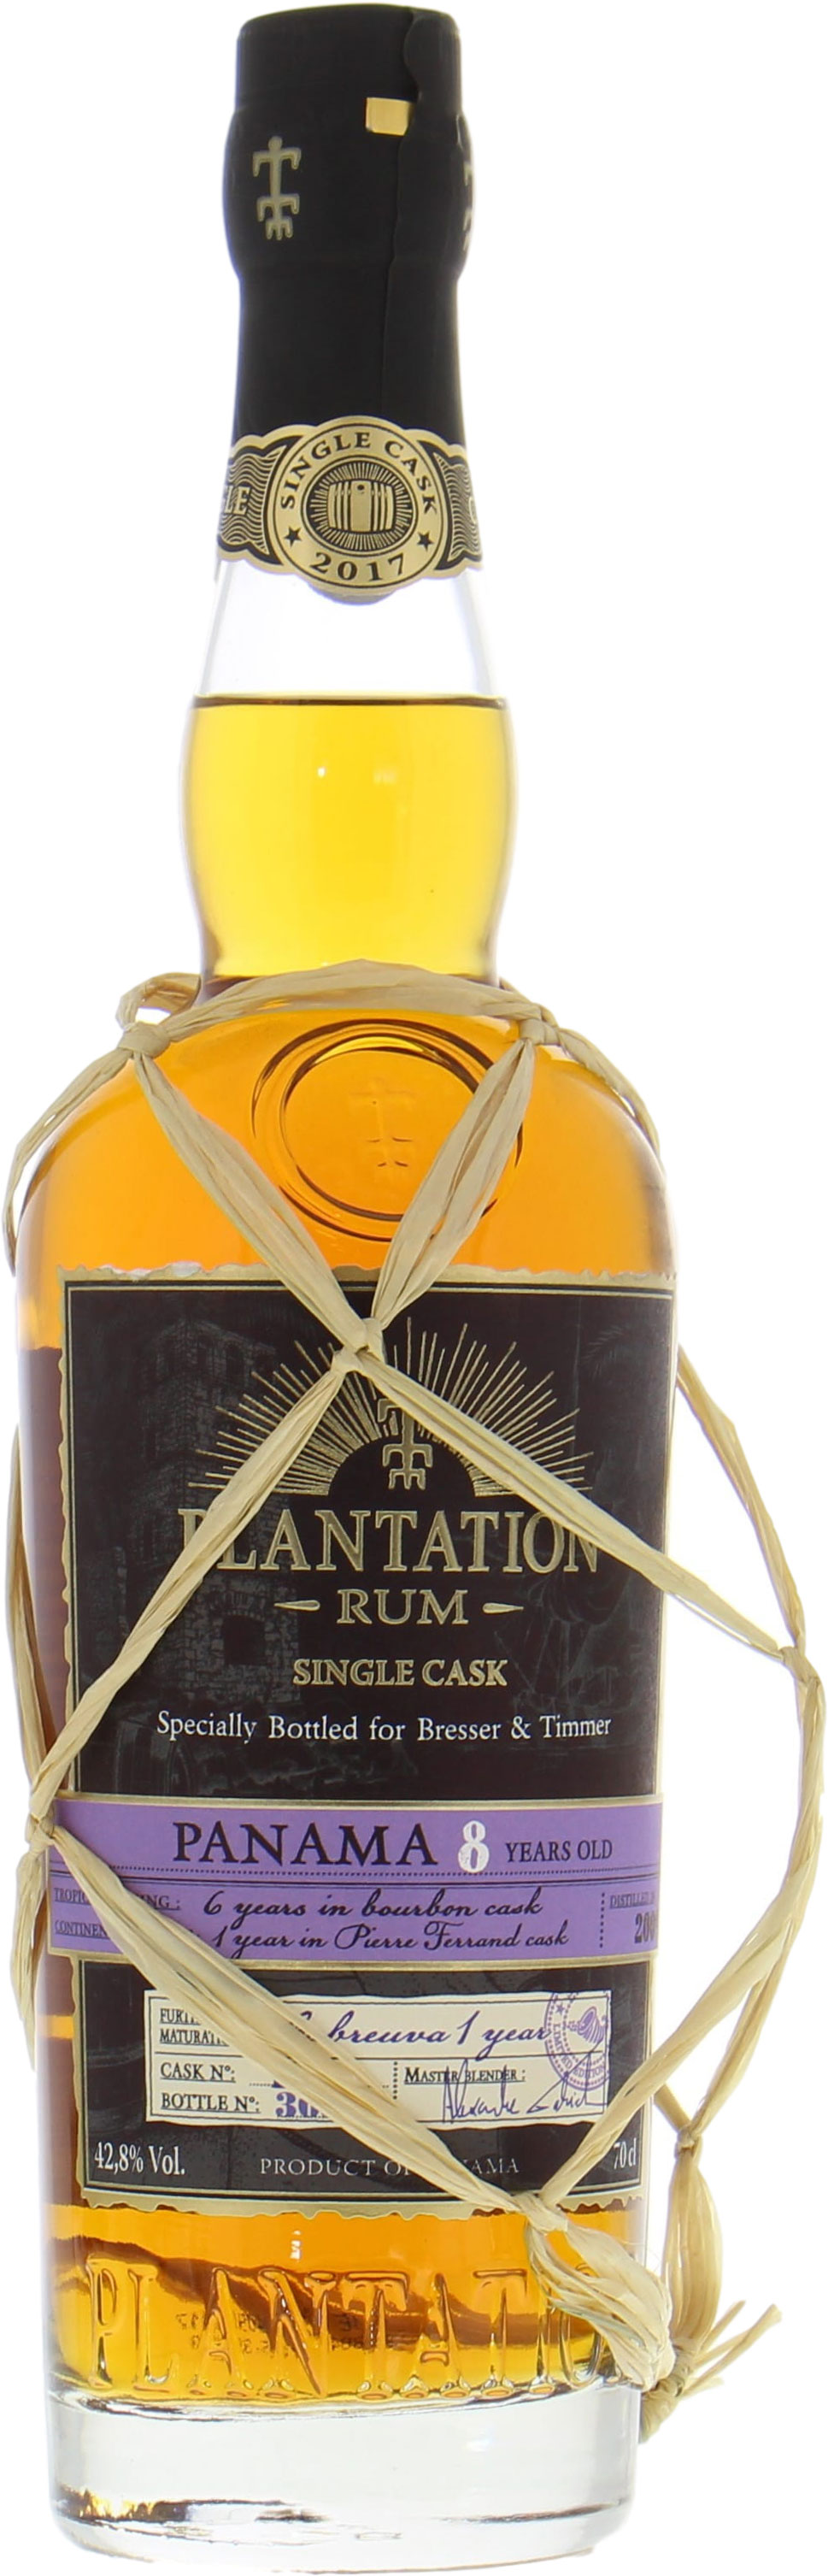 Plantation Rum - Panama 8 Years Old Single Cask:12 42.8% NV Perfect